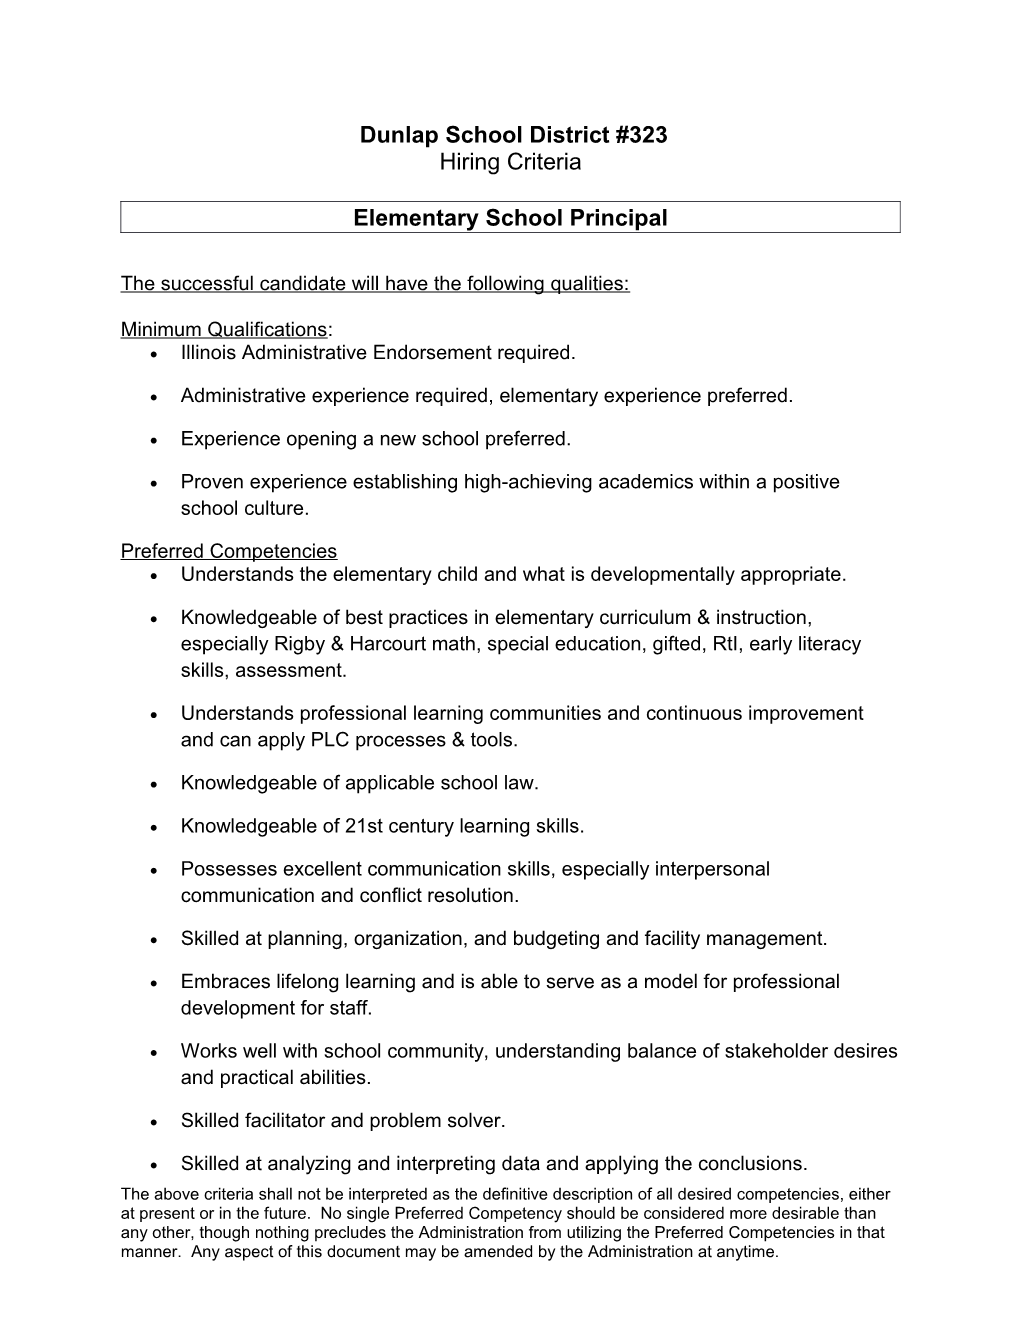 Elementary School Principal Hiring Criteria - DRAFT